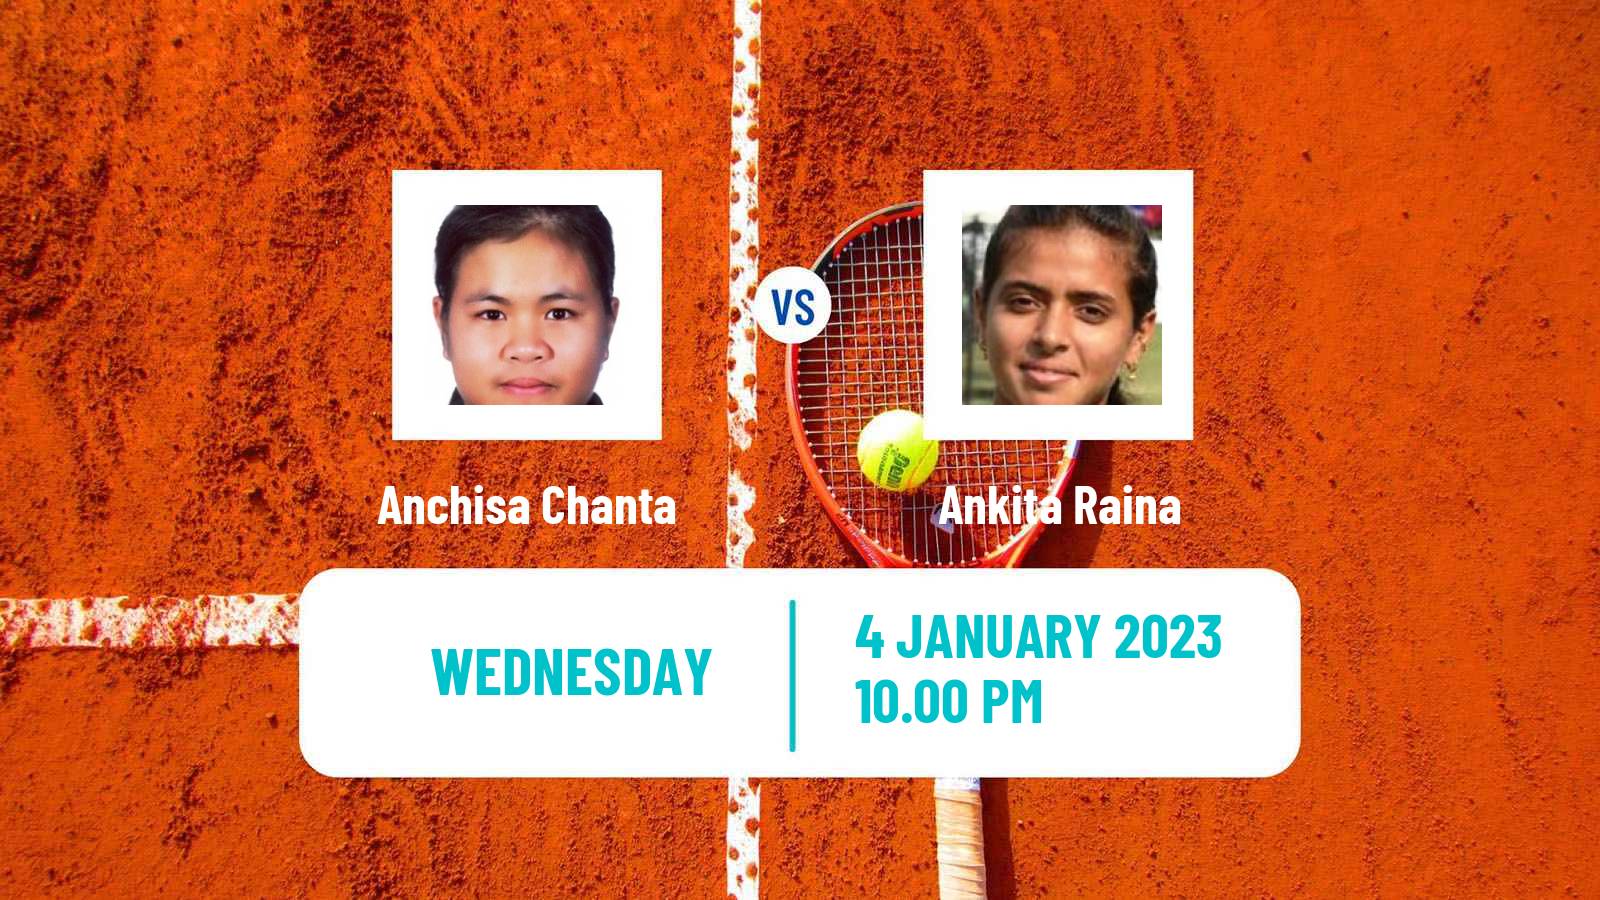 Tennis ITF Tournaments Anchisa Chanta - Ankita Raina